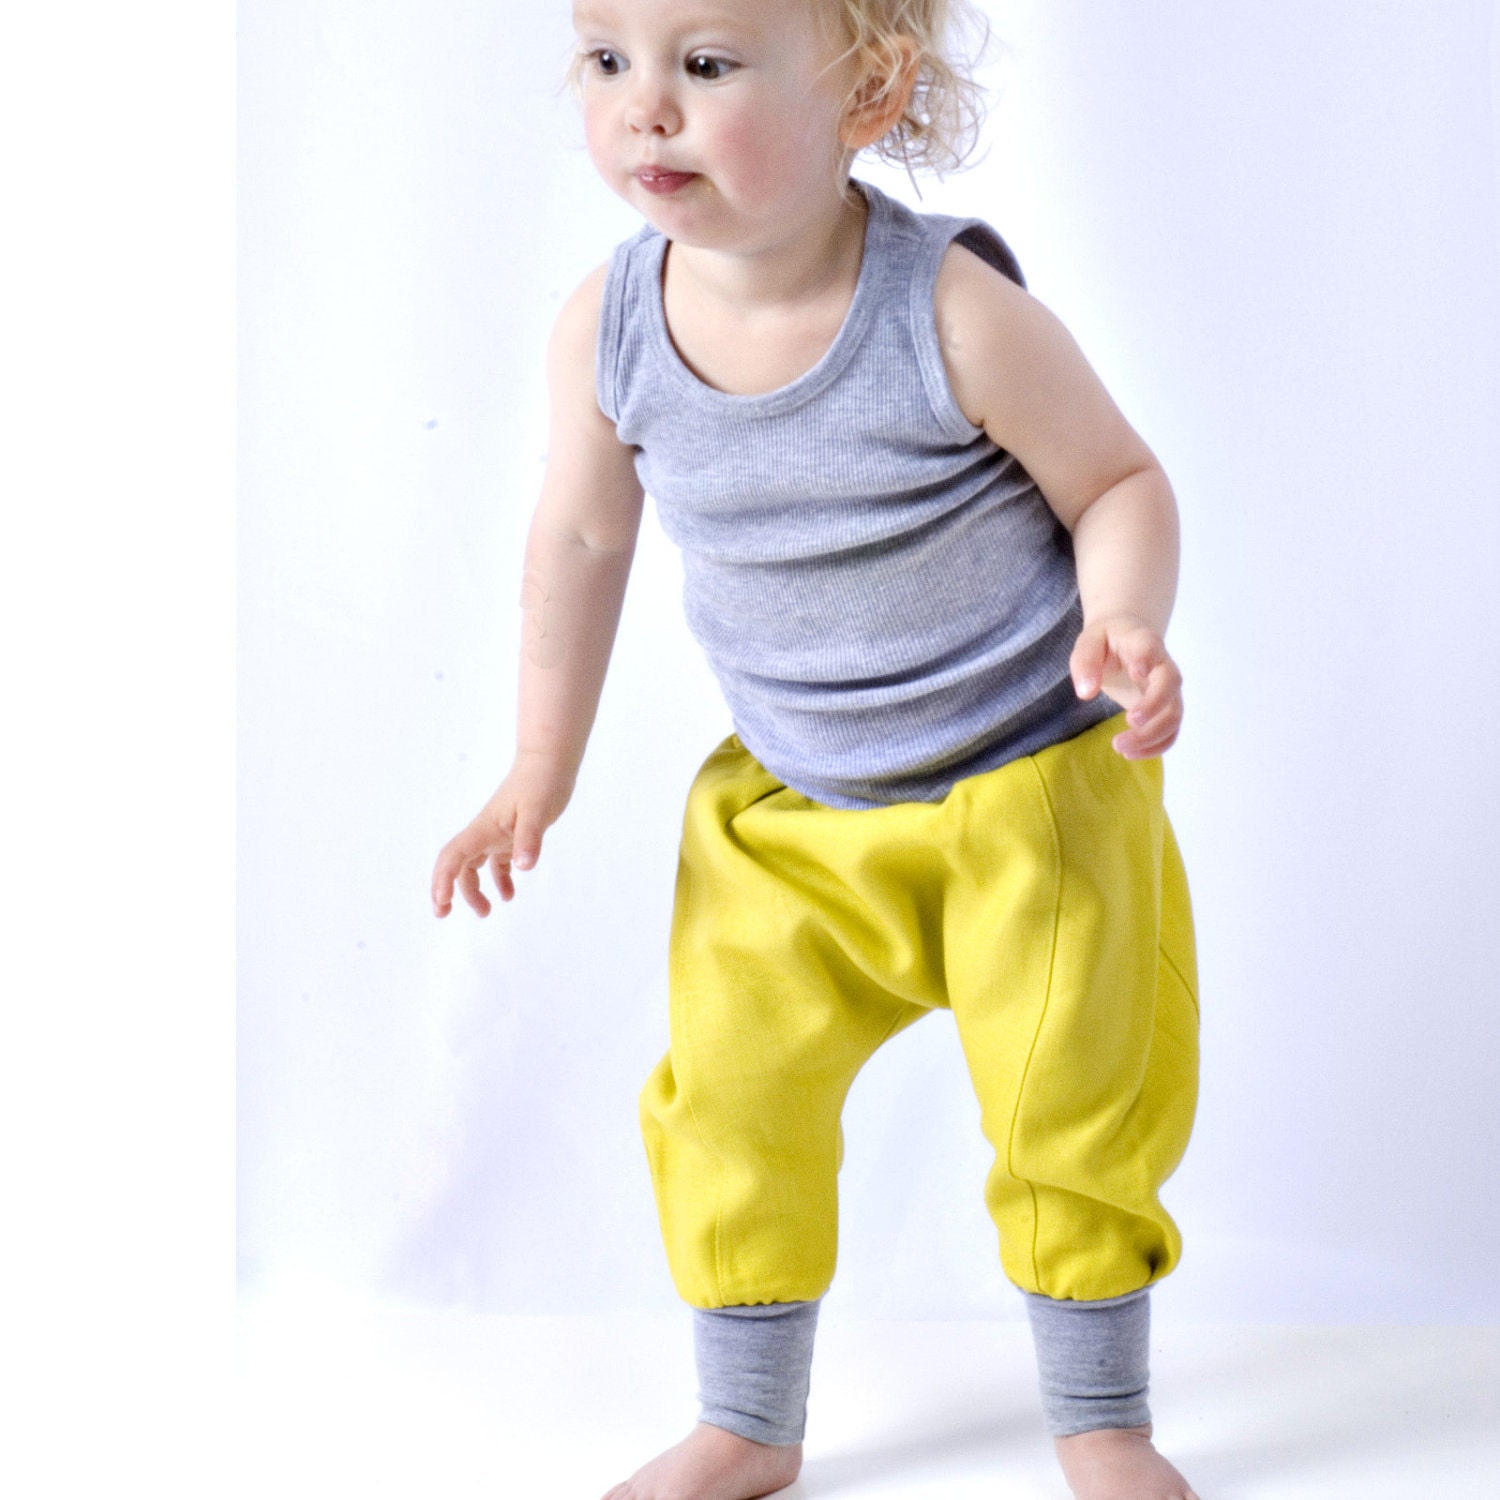 downtown aladdin pants - toddler - lemon/heather grey - unisex boy/girl bottoms - modern bright